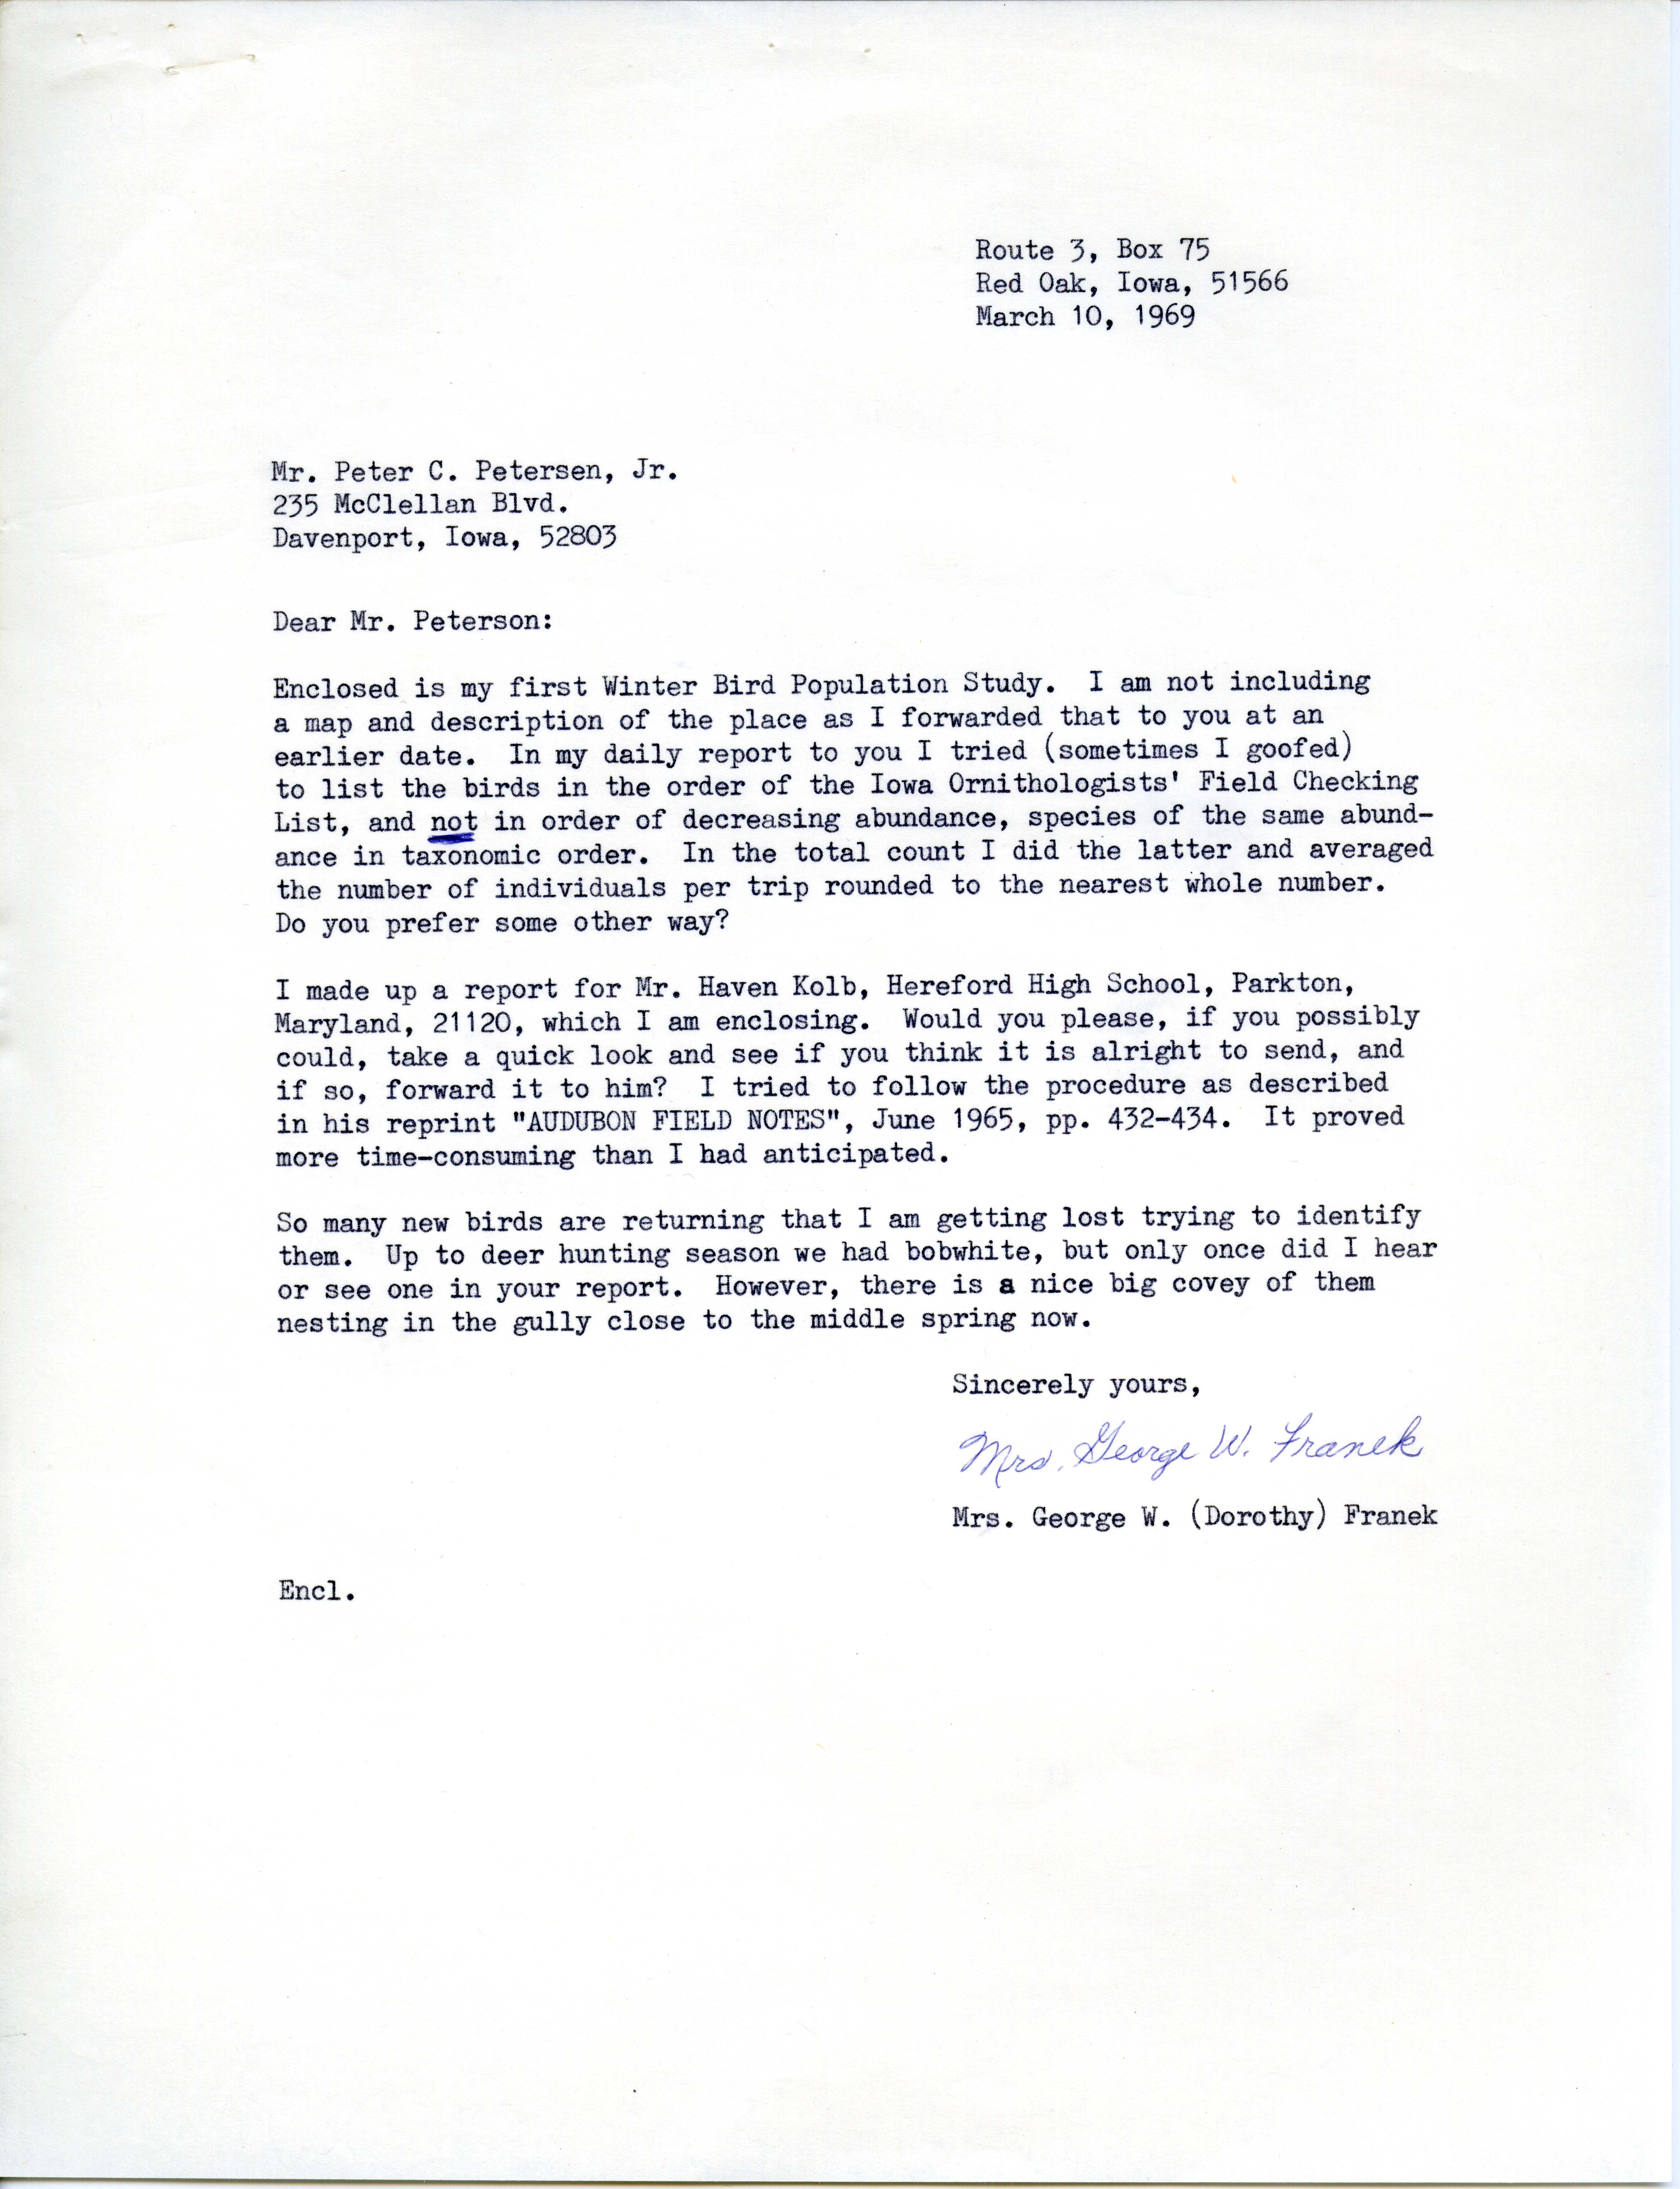 Dorothy Franek letter to Peter C. Peterson regarding her first winter bird population study, March 10, 1969